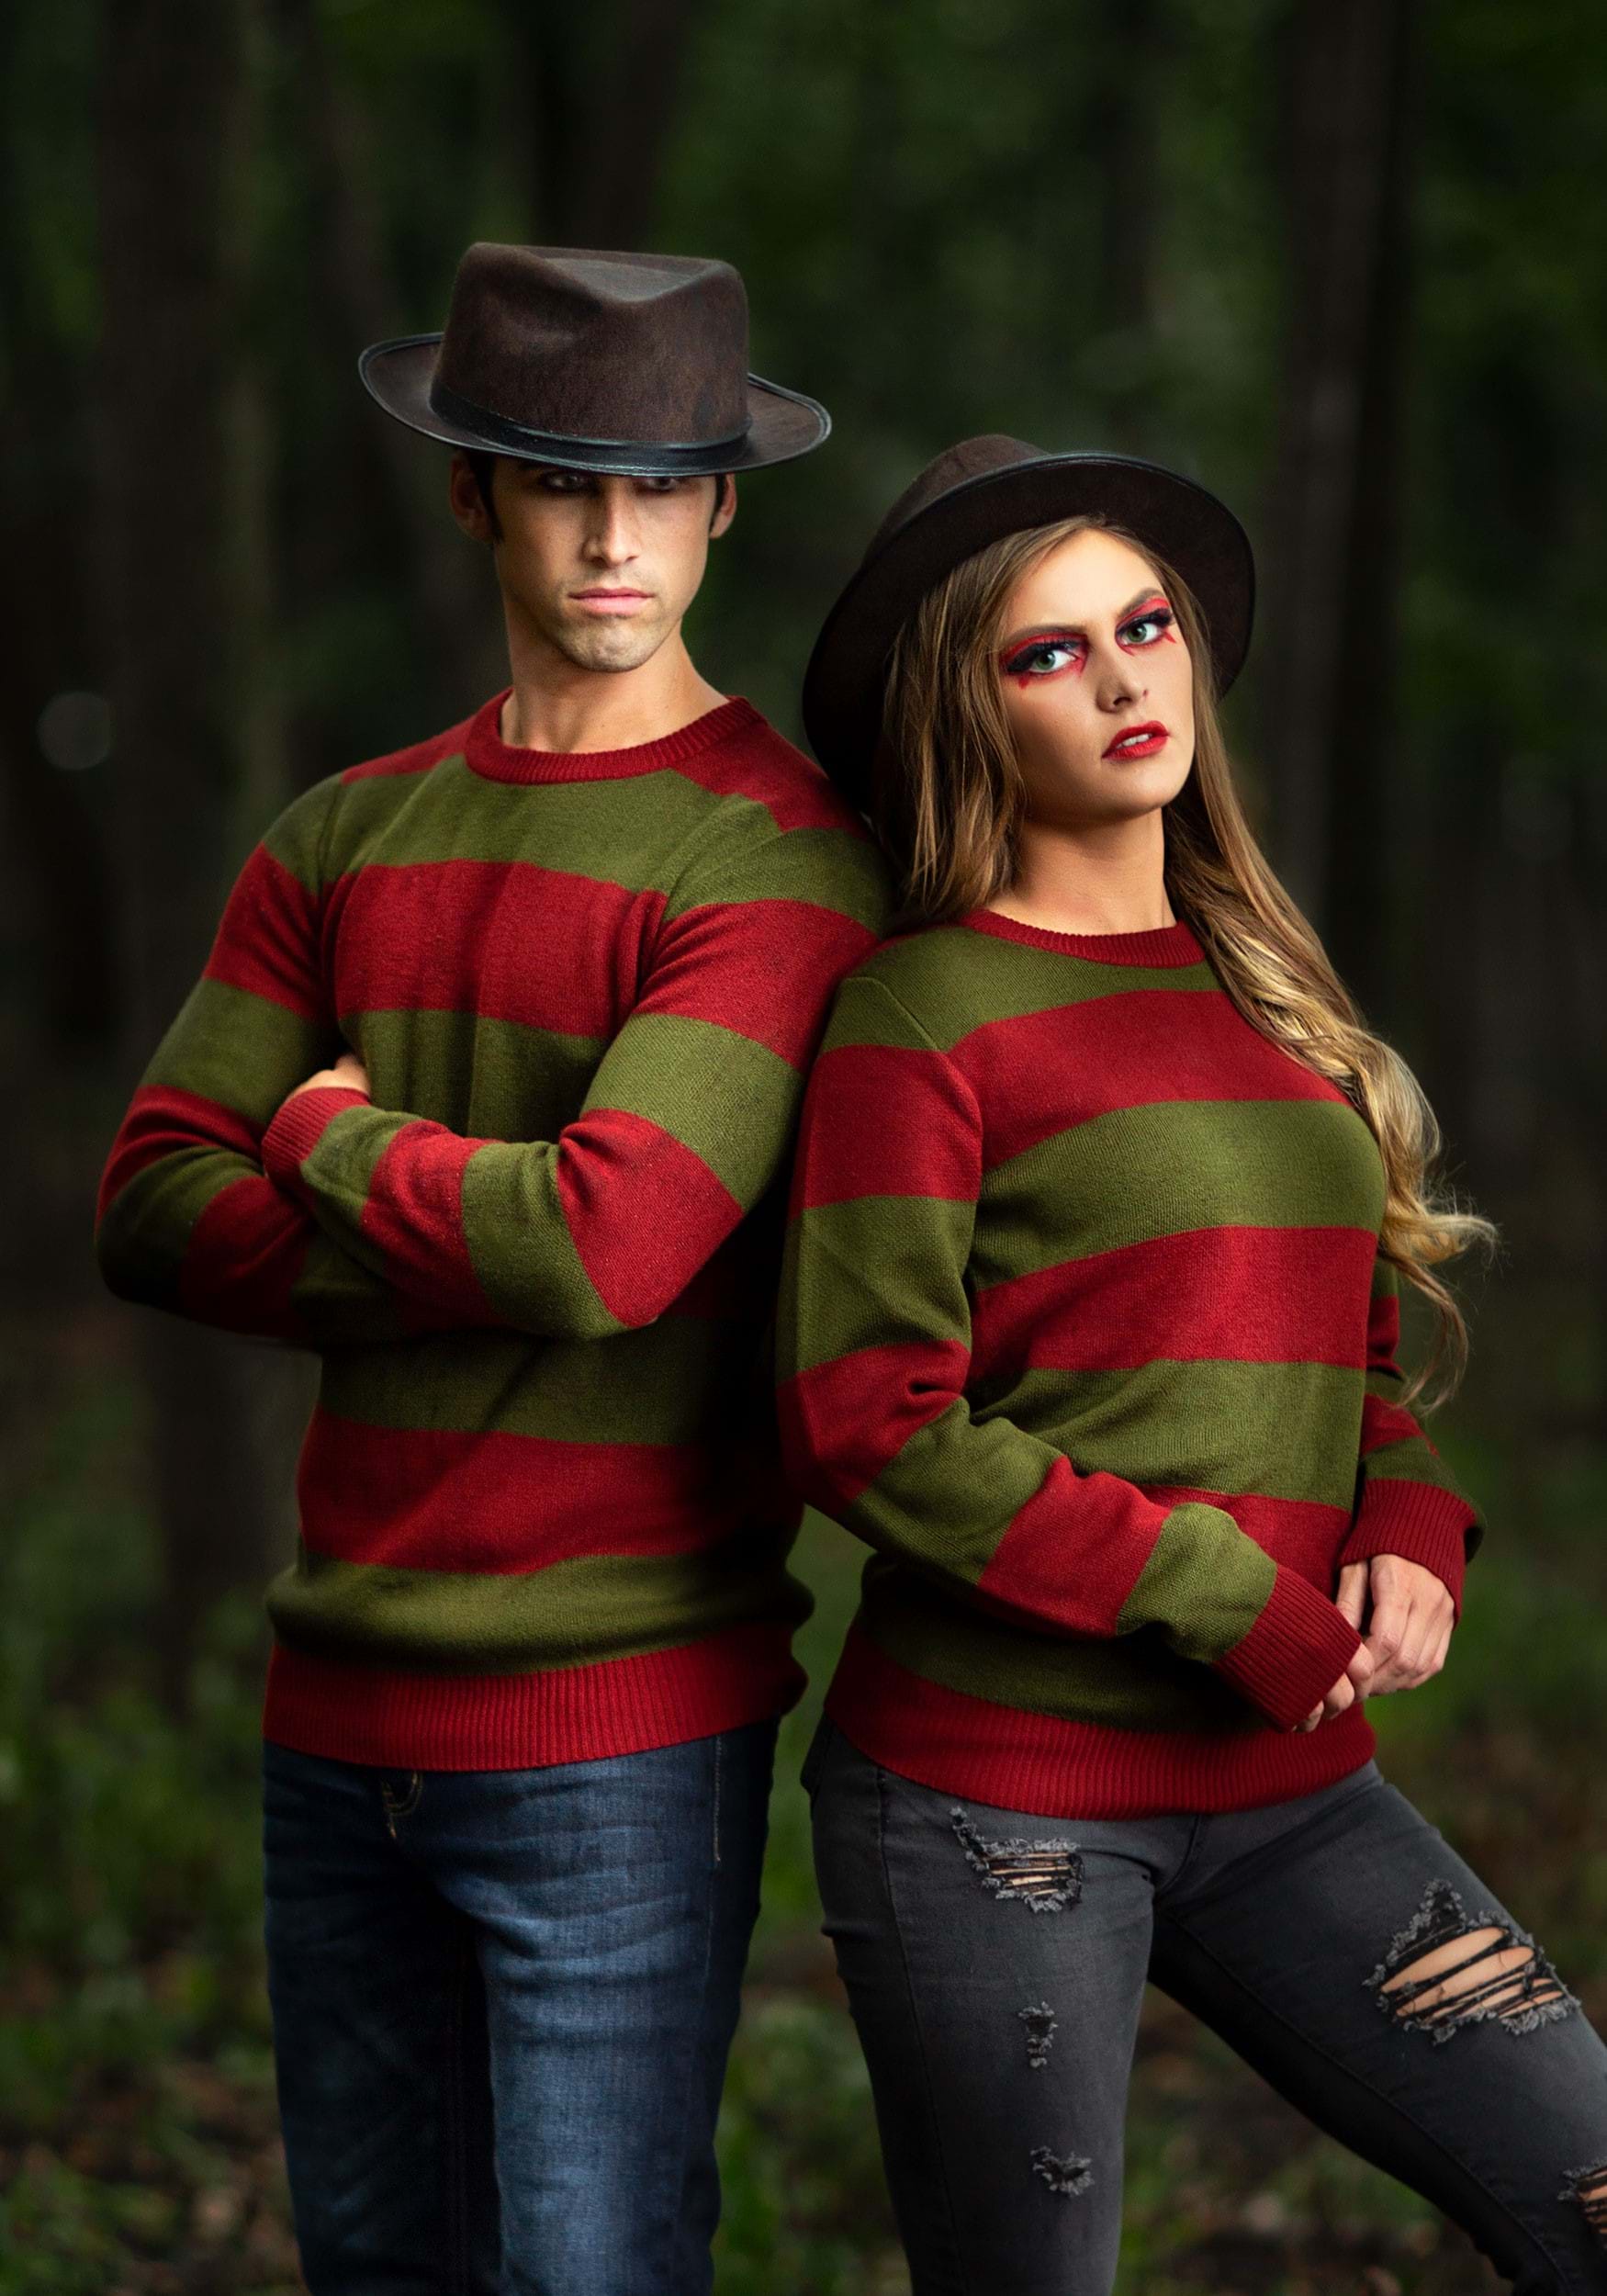 Adult Freddy Krueger Sweater Dress - A Nightmare on Elm Street